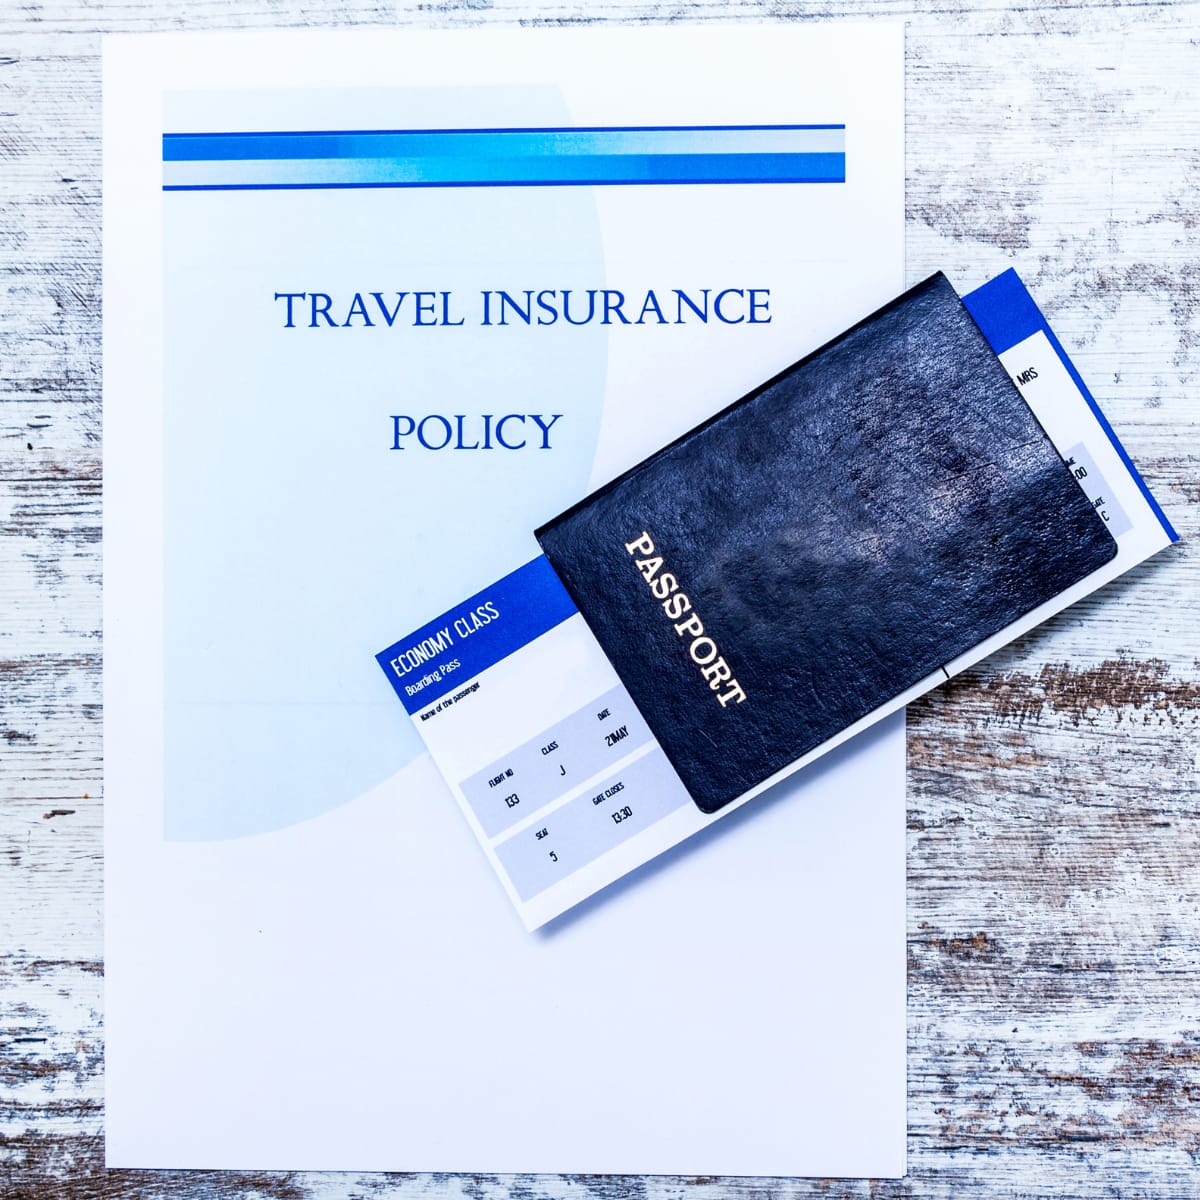 How does Schengen Visa Insurance work?